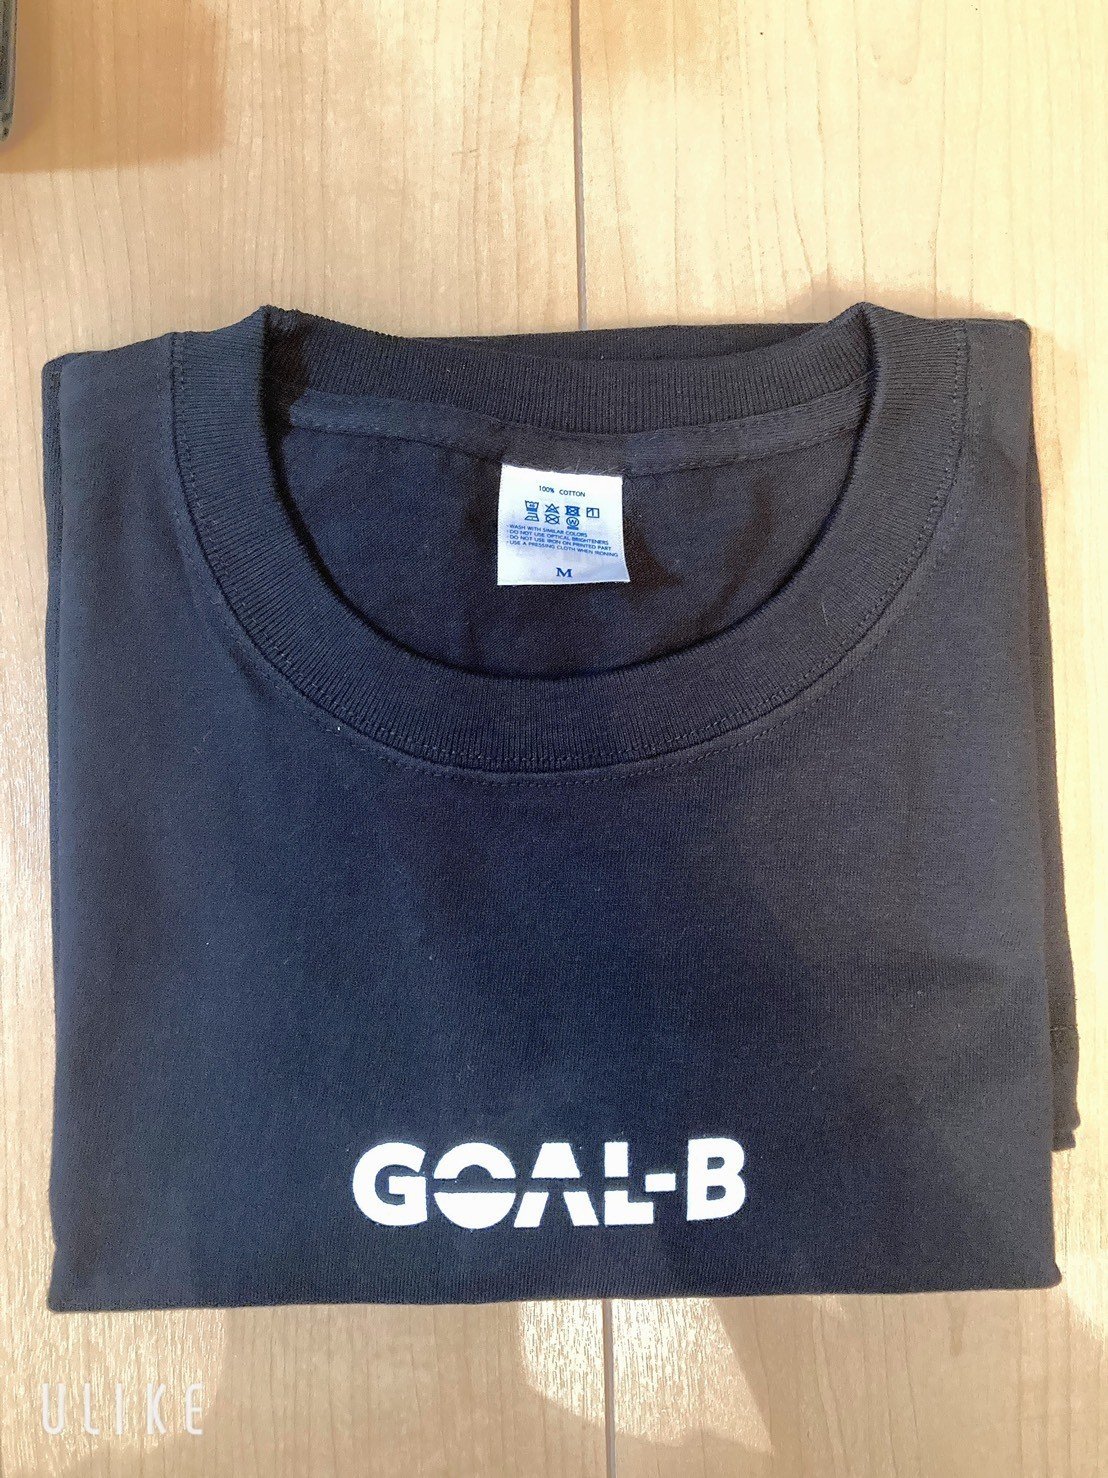 GOAL-B tシャツ